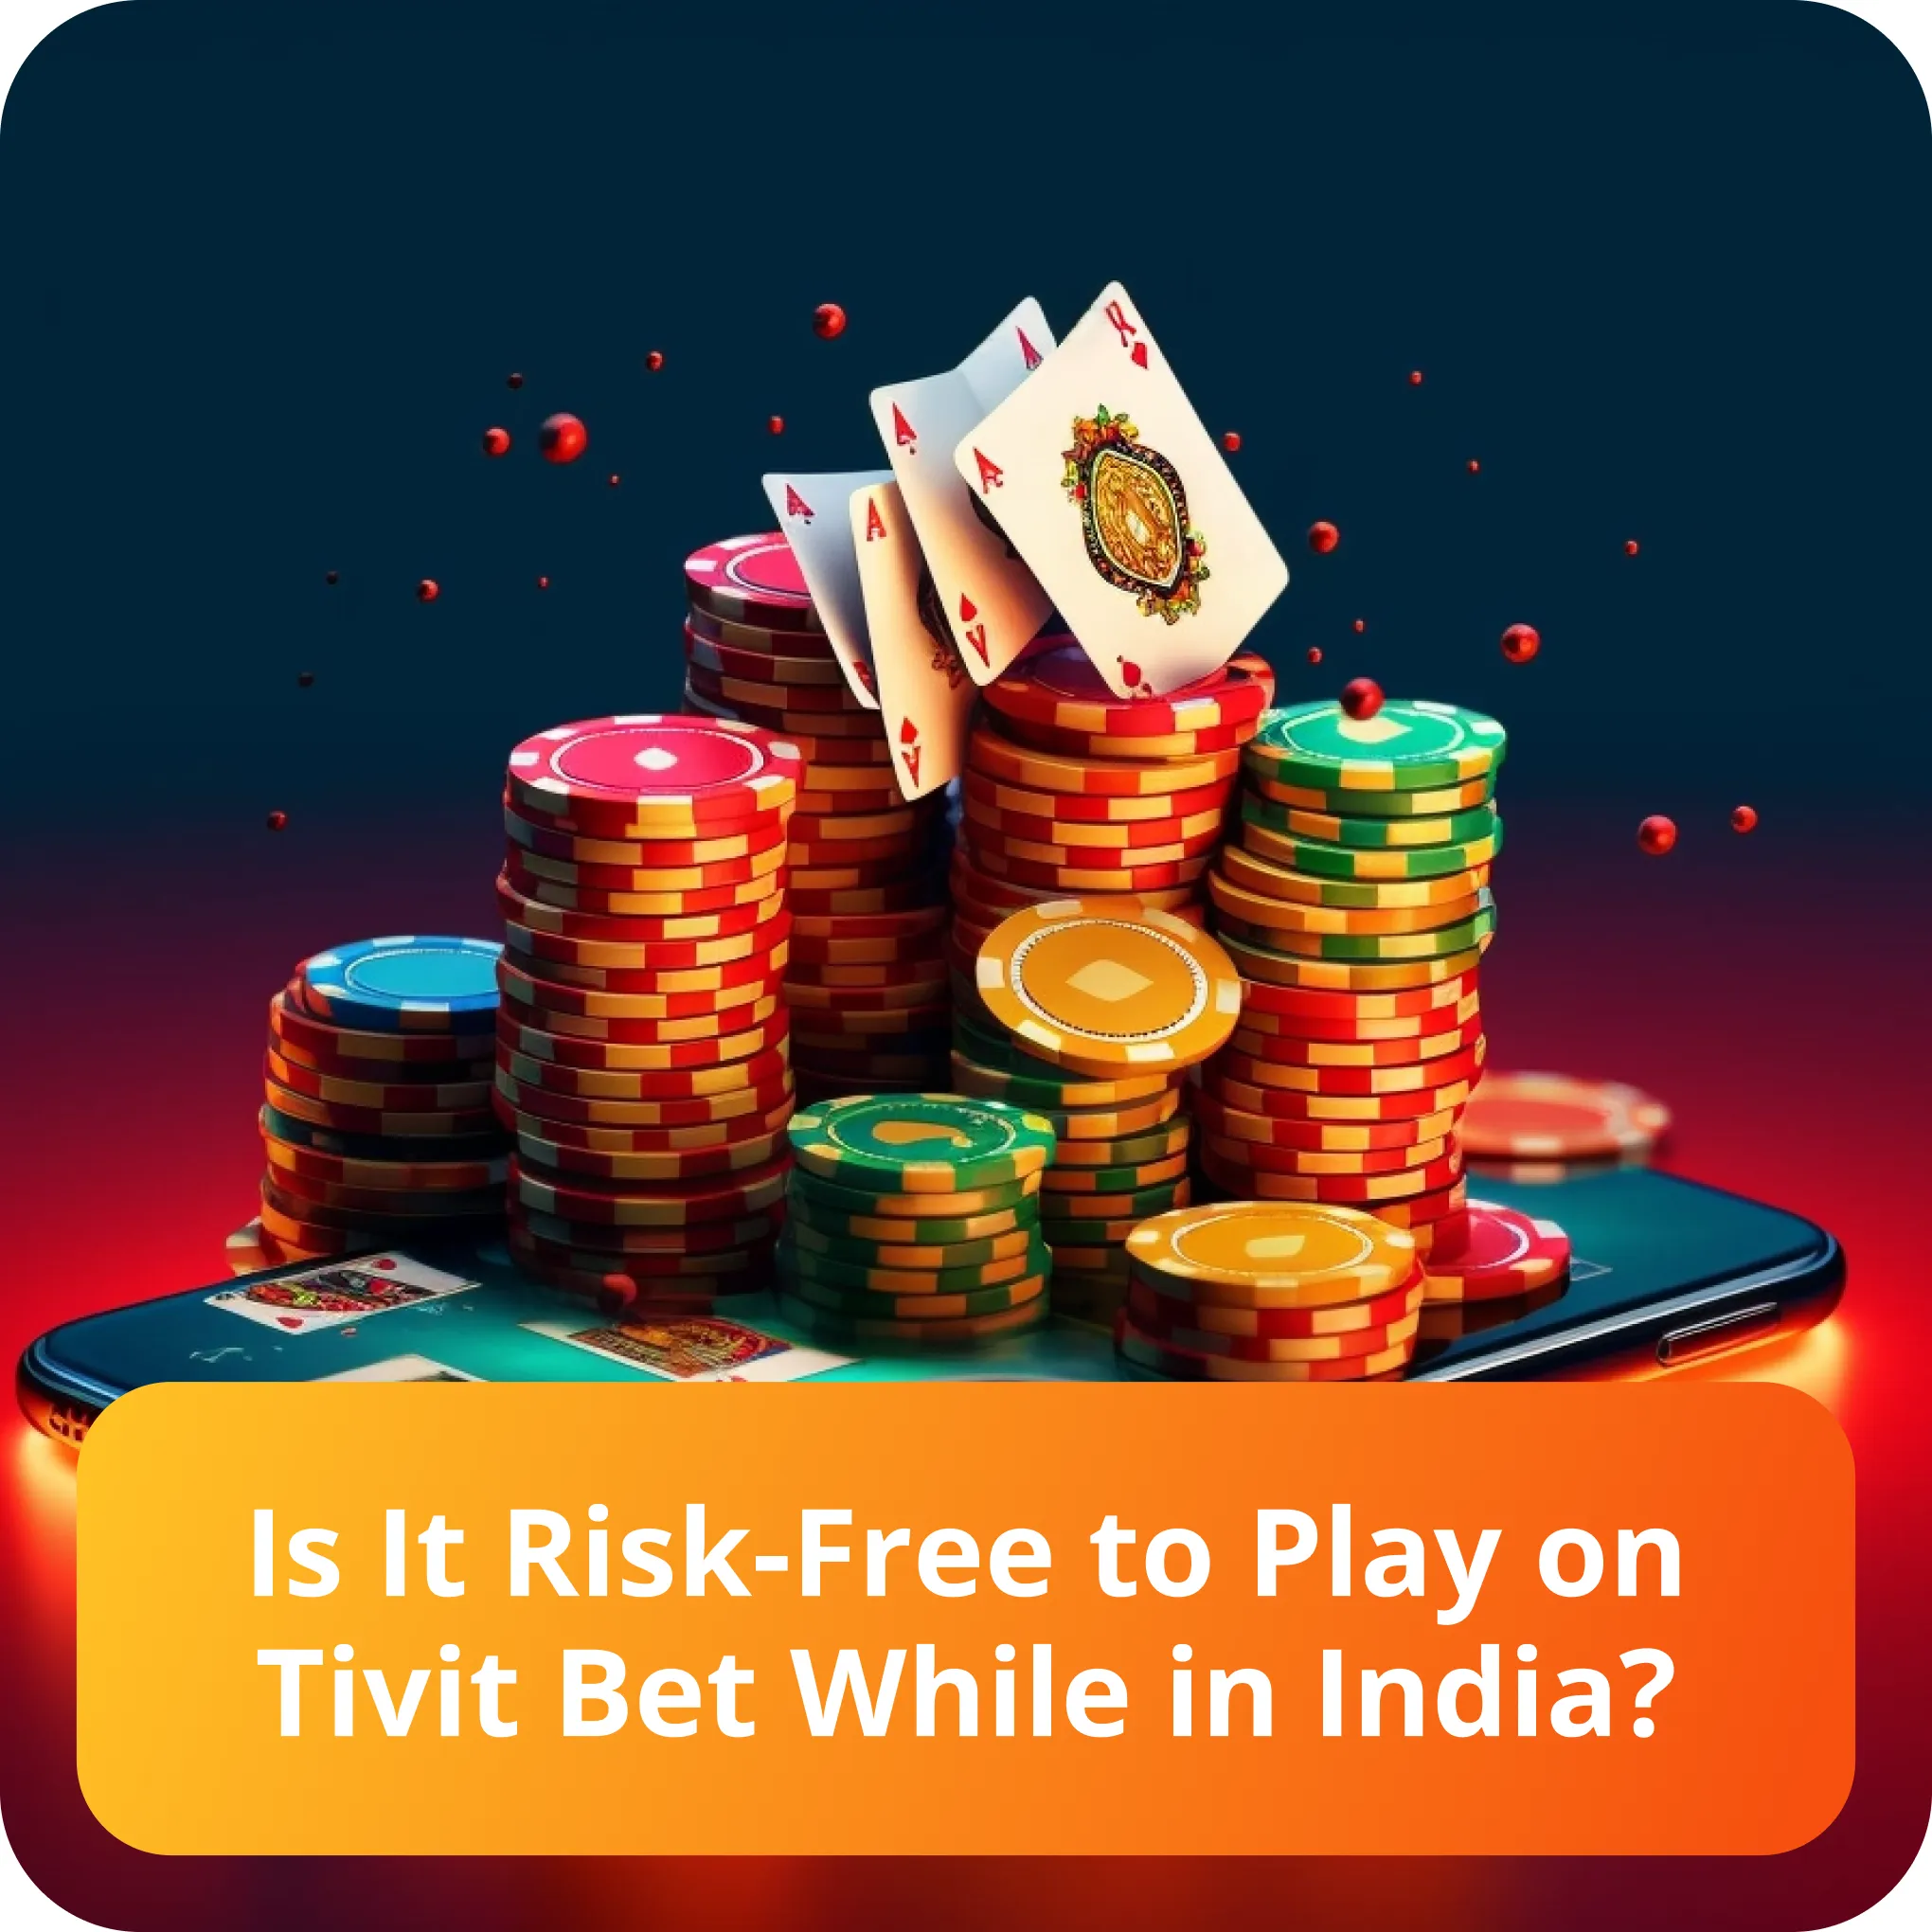 tivit bet india risks